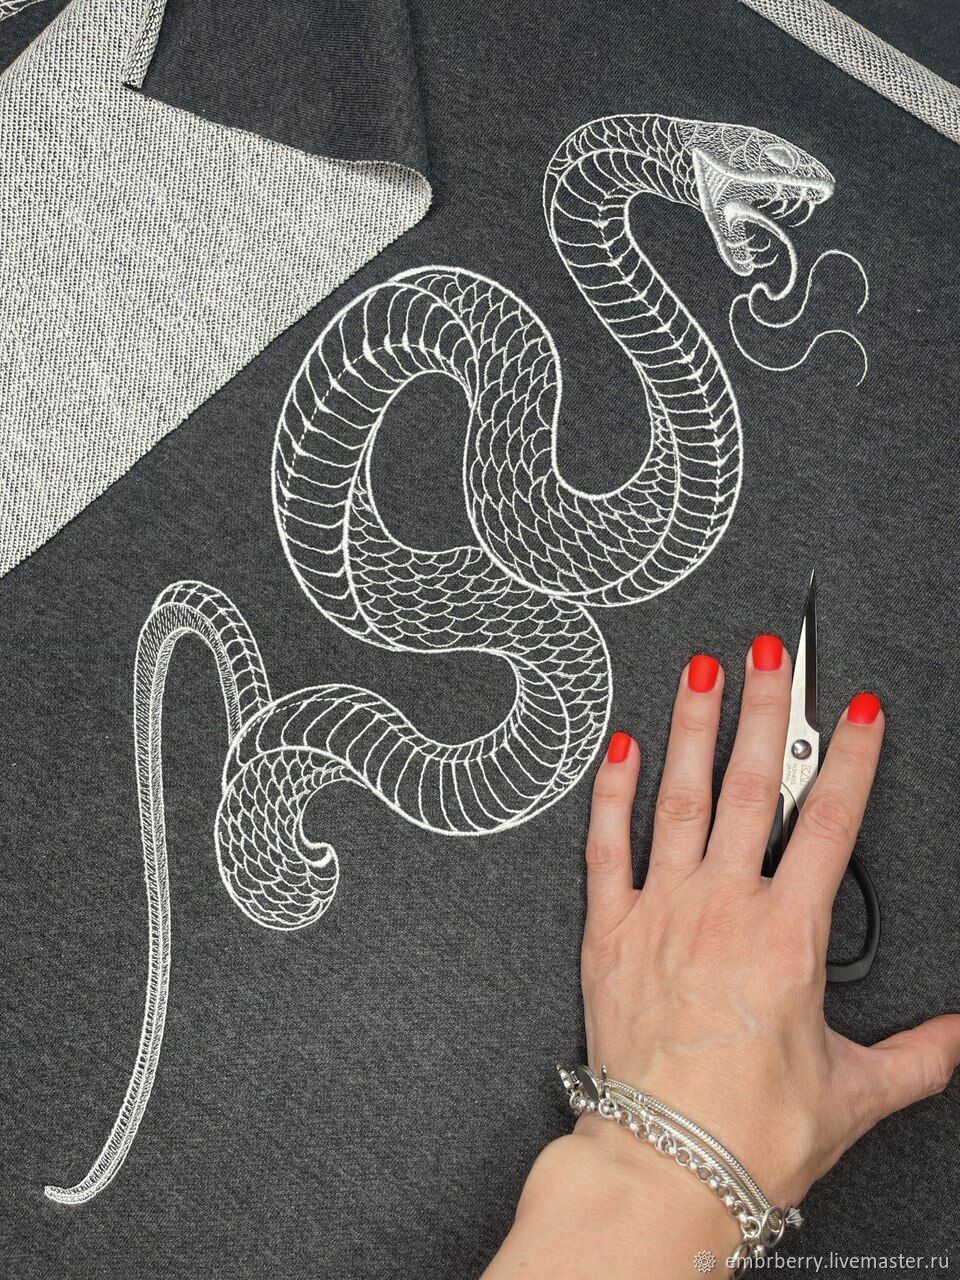 Заказать декоративную фактурную штукатурку Змея голубая от Мраморикс